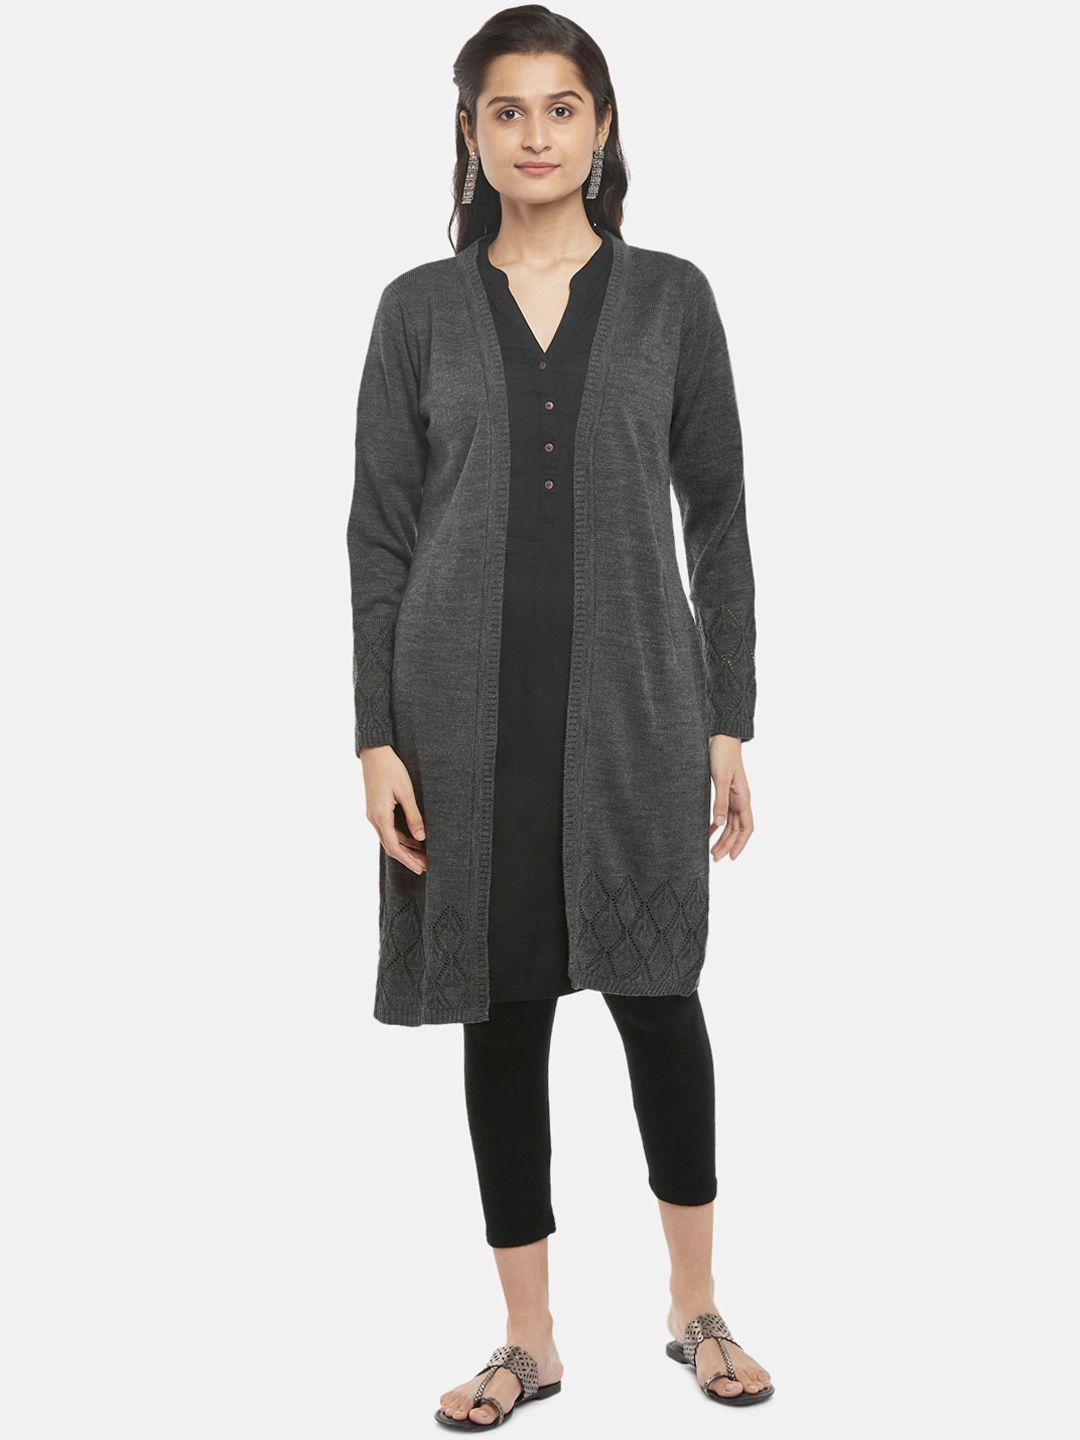 rangmanch by pantaloons women charcoal acrylic longline open front jacket